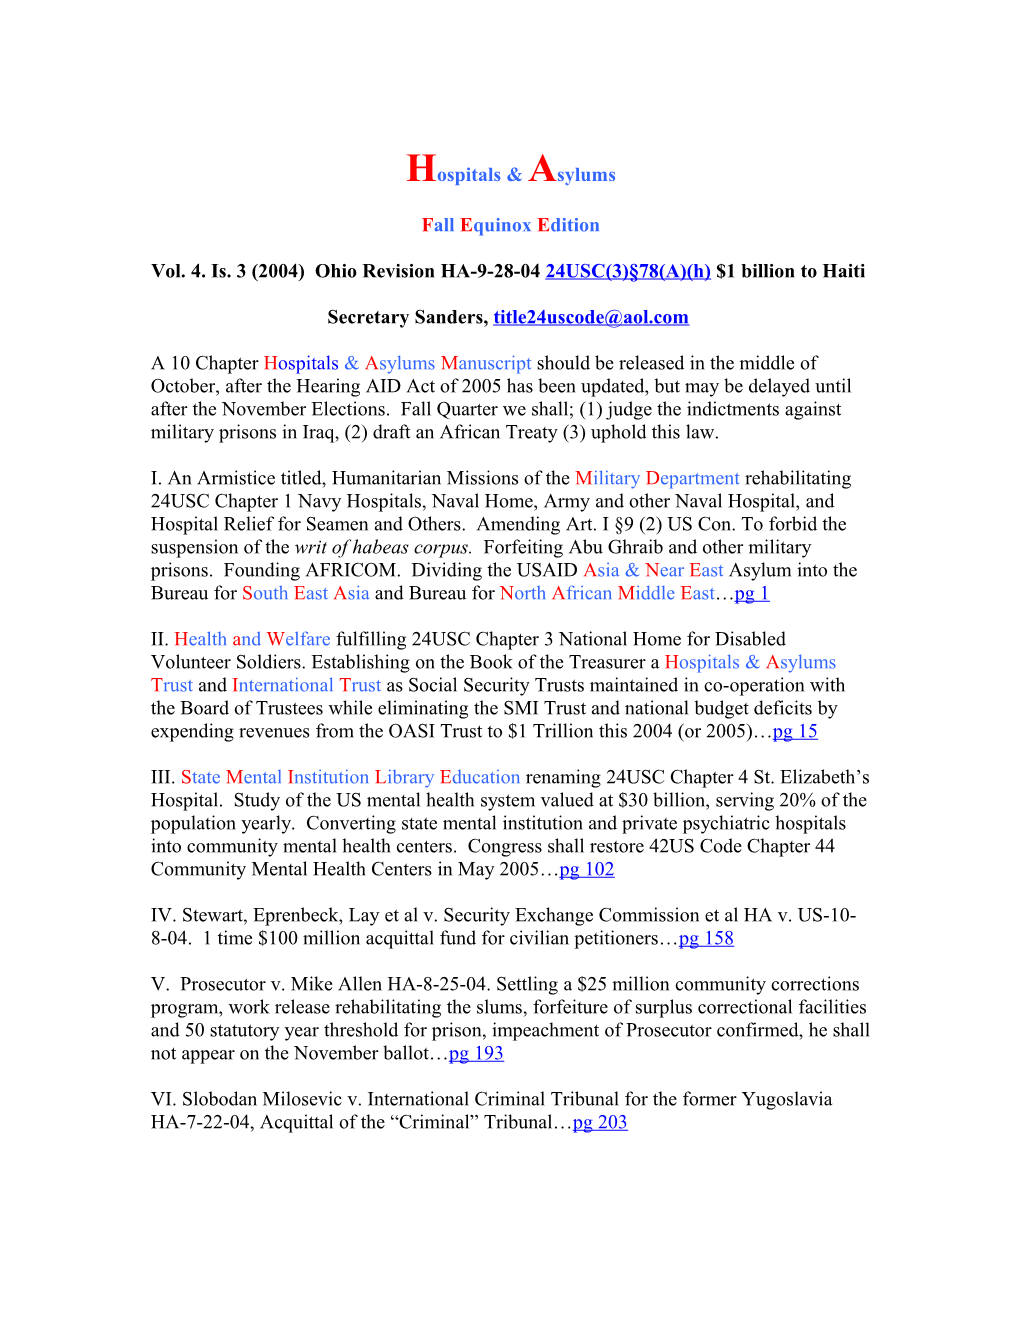 Vol. 4. Is. 3 (2004) Ohio Revision HA-9-28-04 24USC(3) 78(A)(H) $1 Billion to Haiti